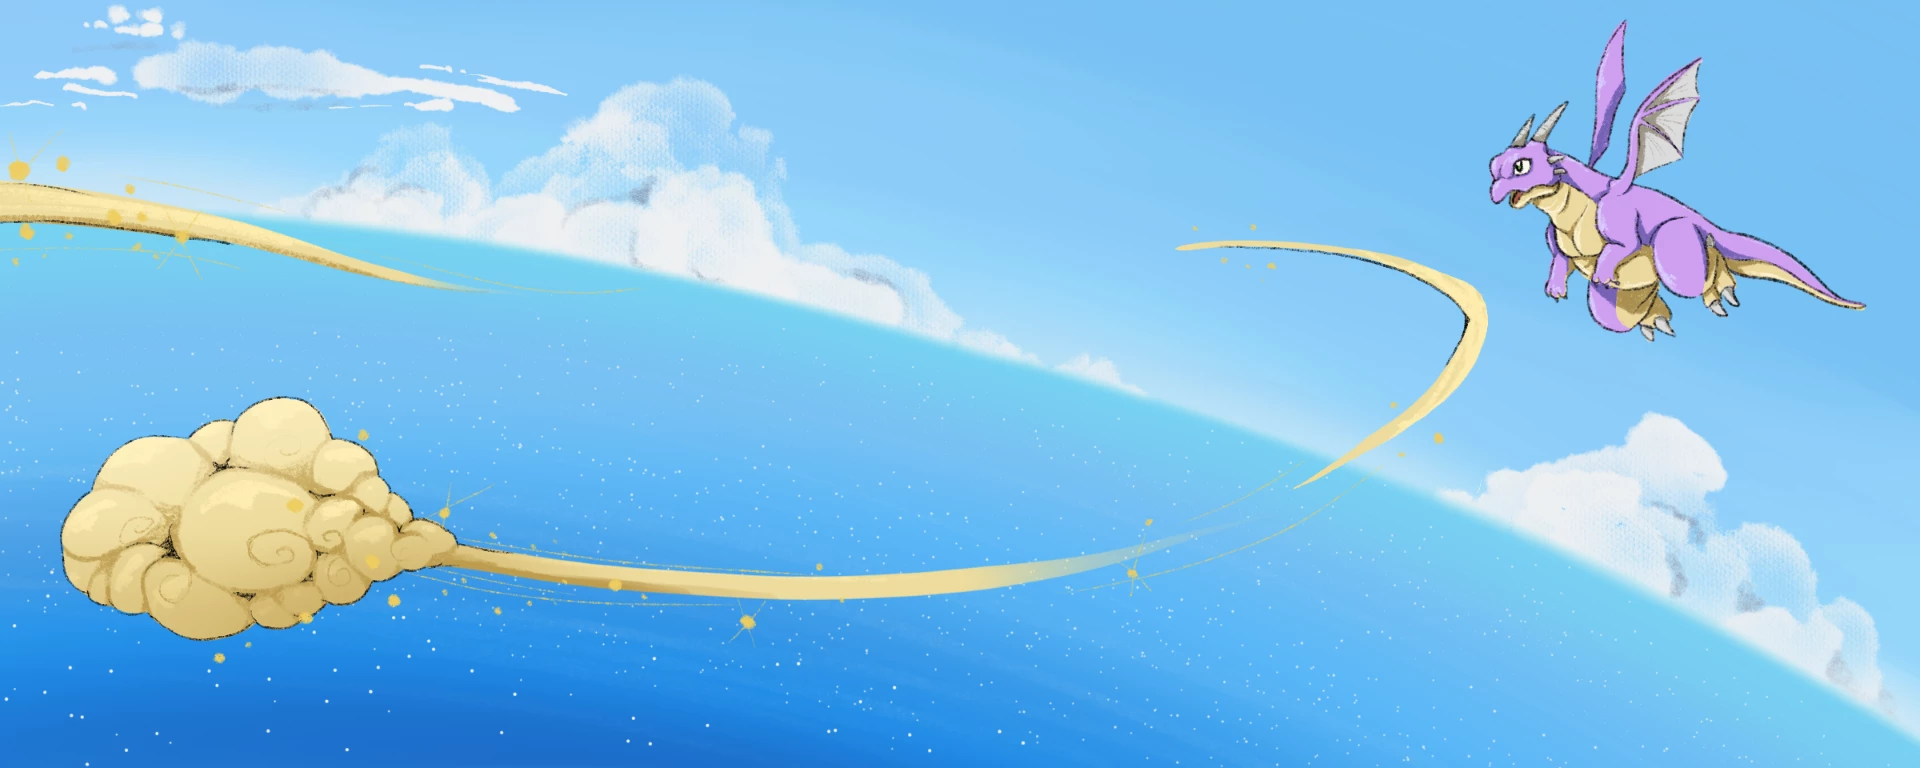 banner dragonball z dragon flies over ocean